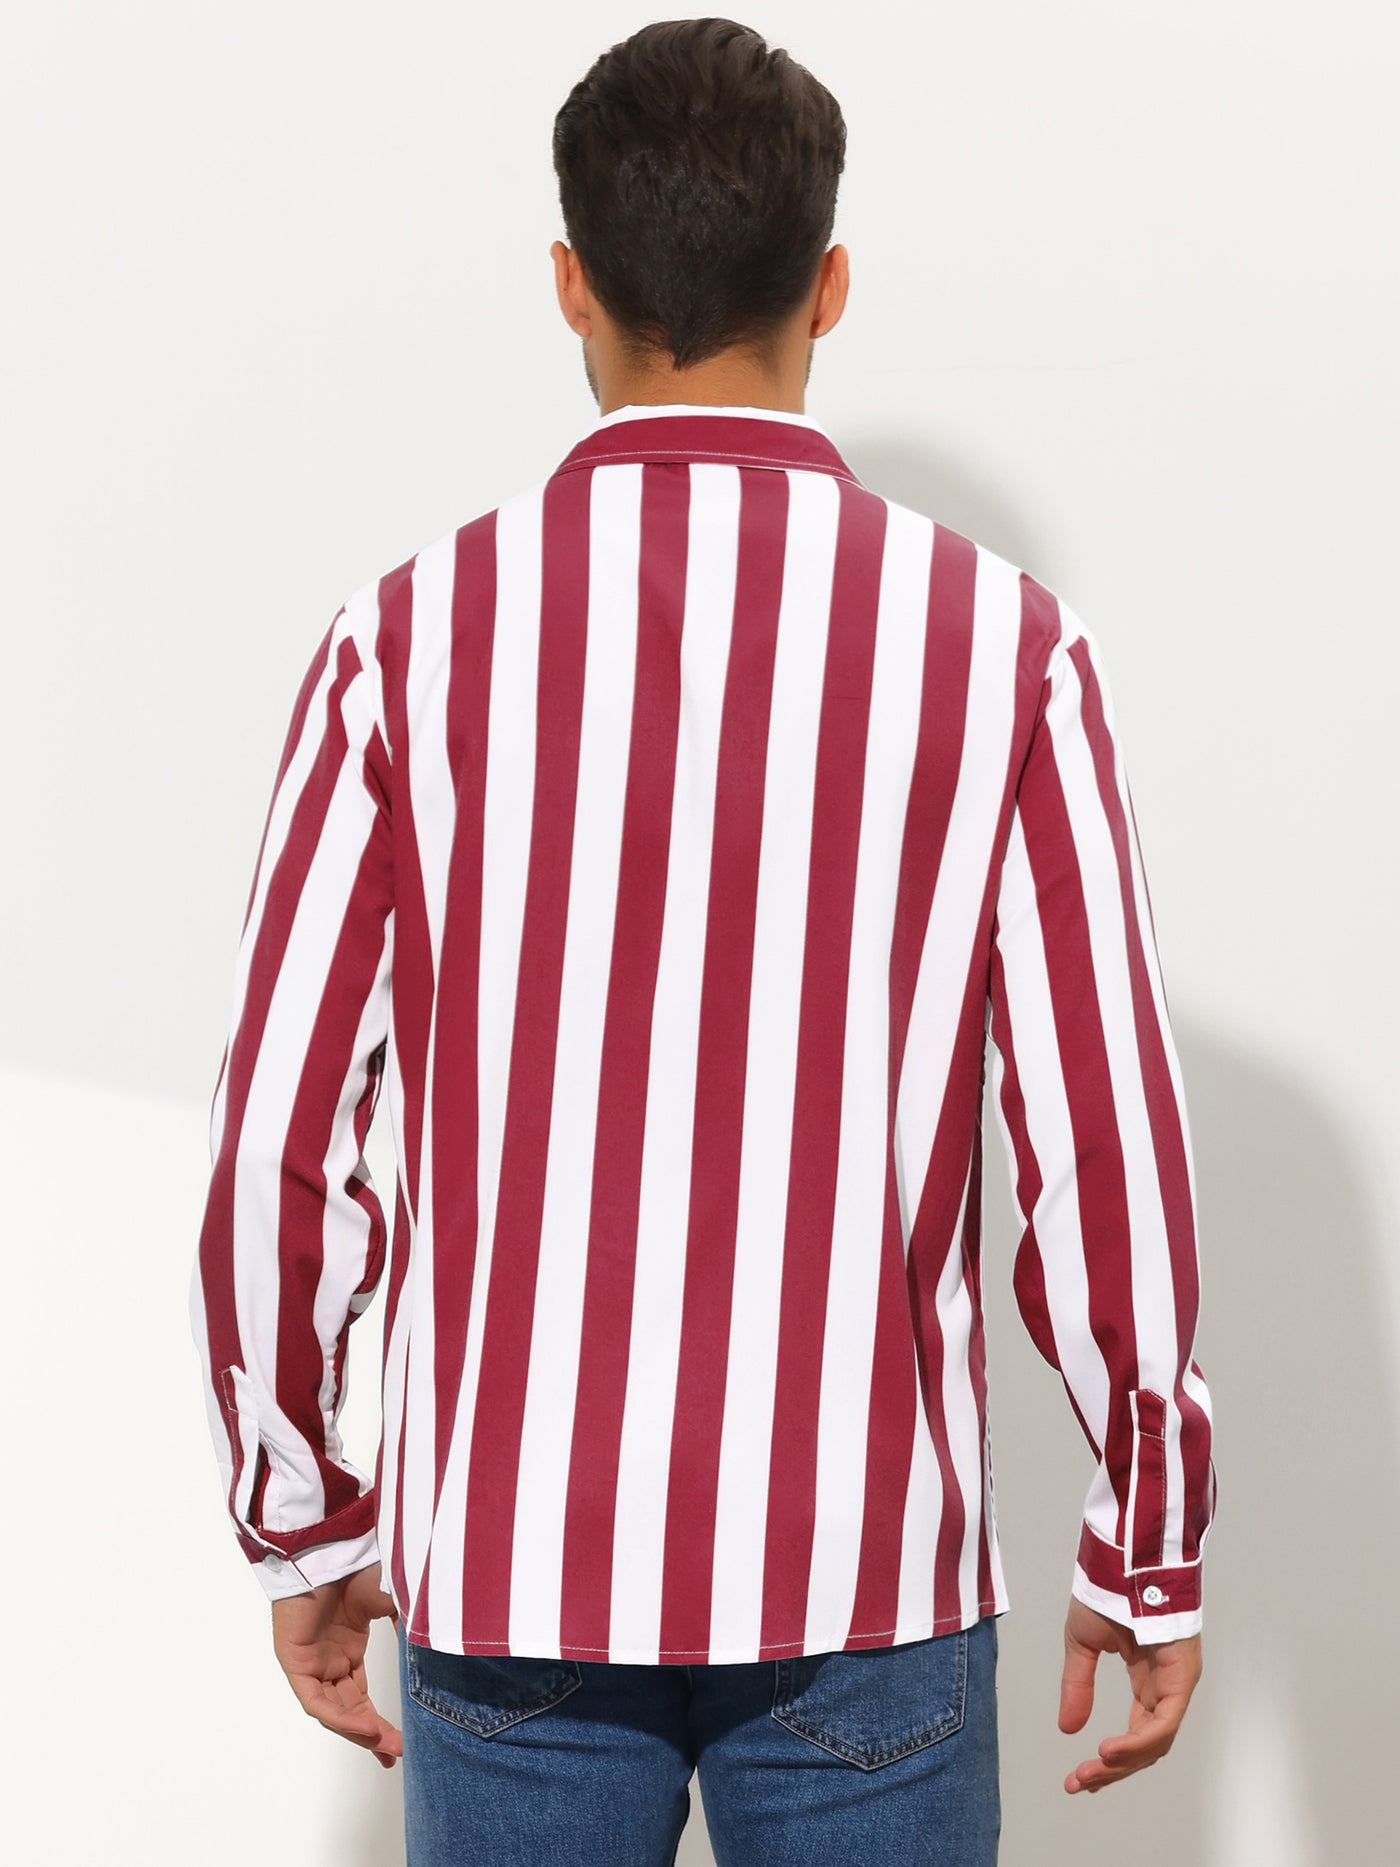 Bublédon Men's Striped Shirt Long Sleeve Button Down Color Block Shirts